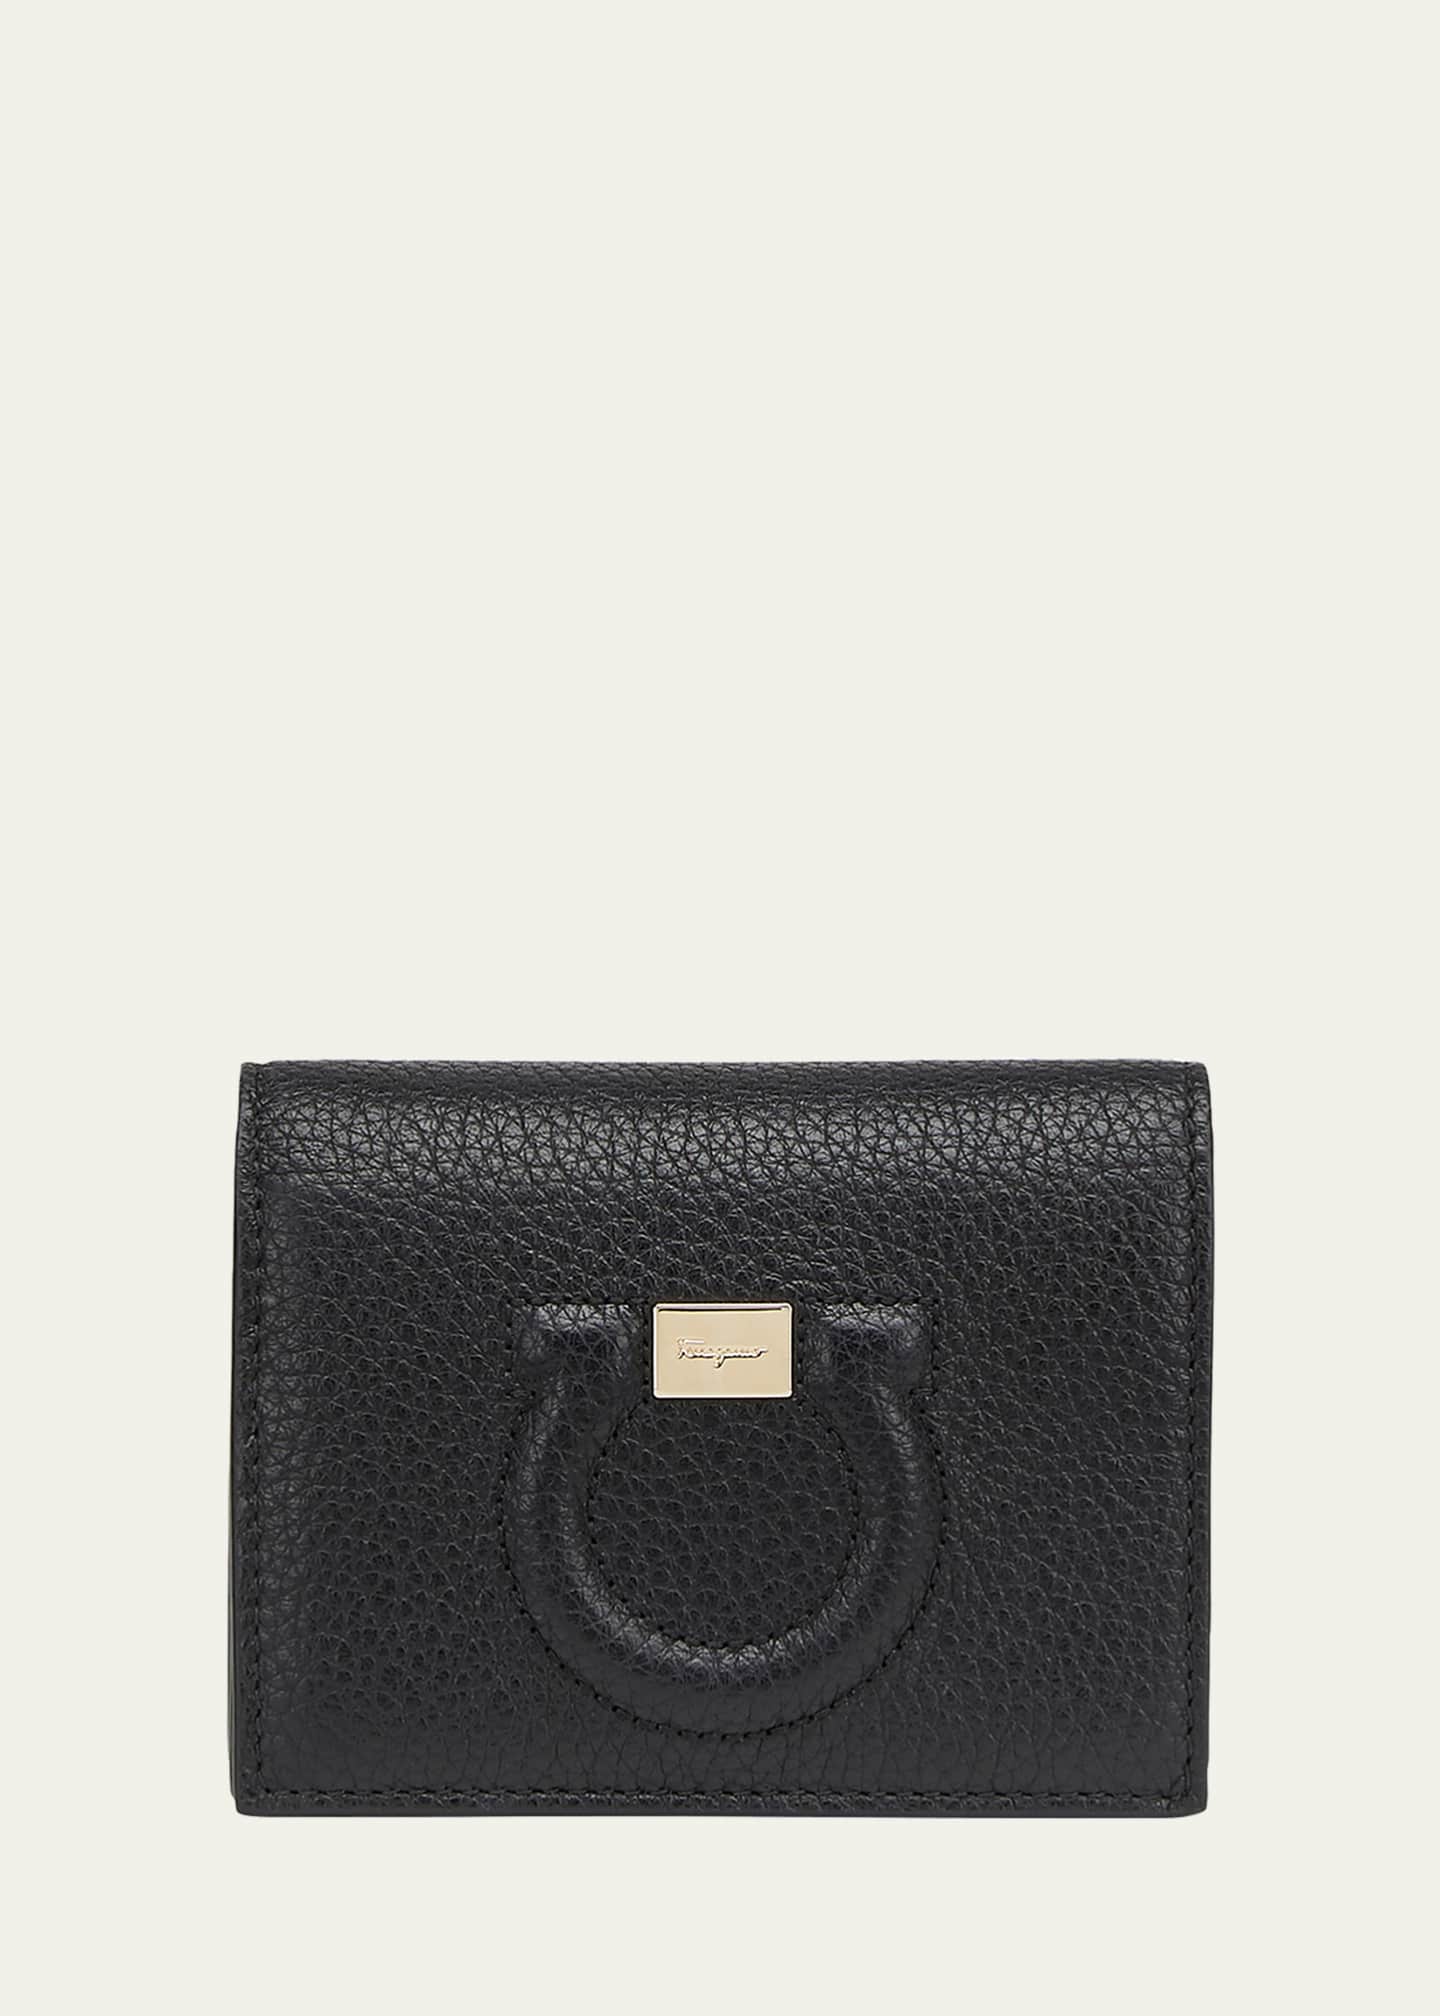 Salvatore Ferragamo Black Leather Gancini Wallet